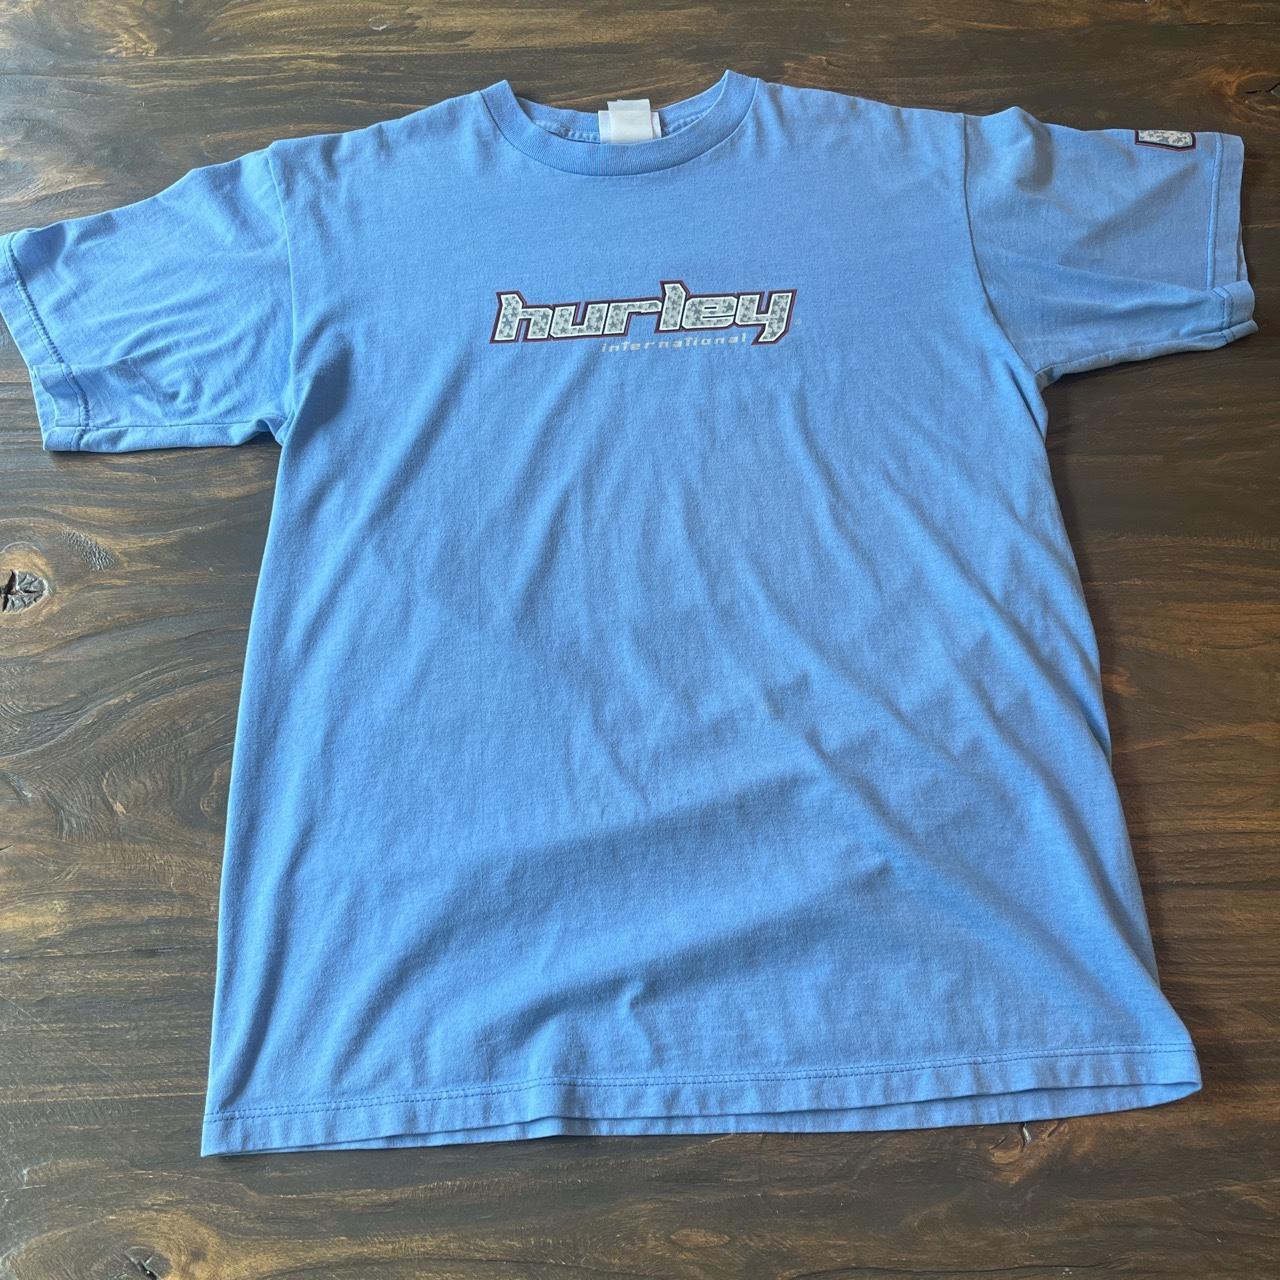 Vintage Light blue Hurley international shirt, no... - Depop